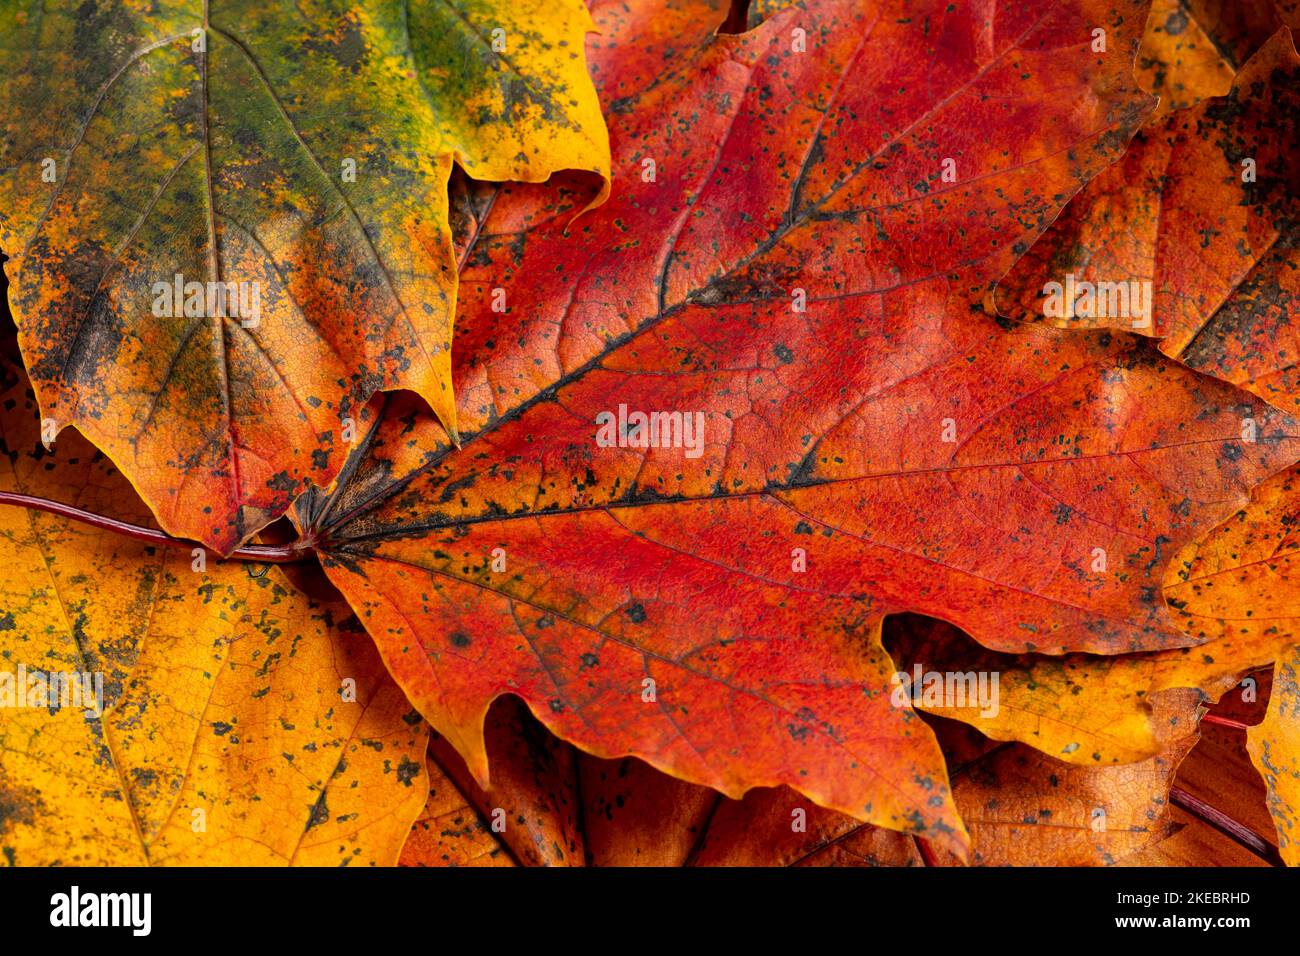 Closeup of tree leaves with autumn colors. Fall season and foliage concept. Stock Photo